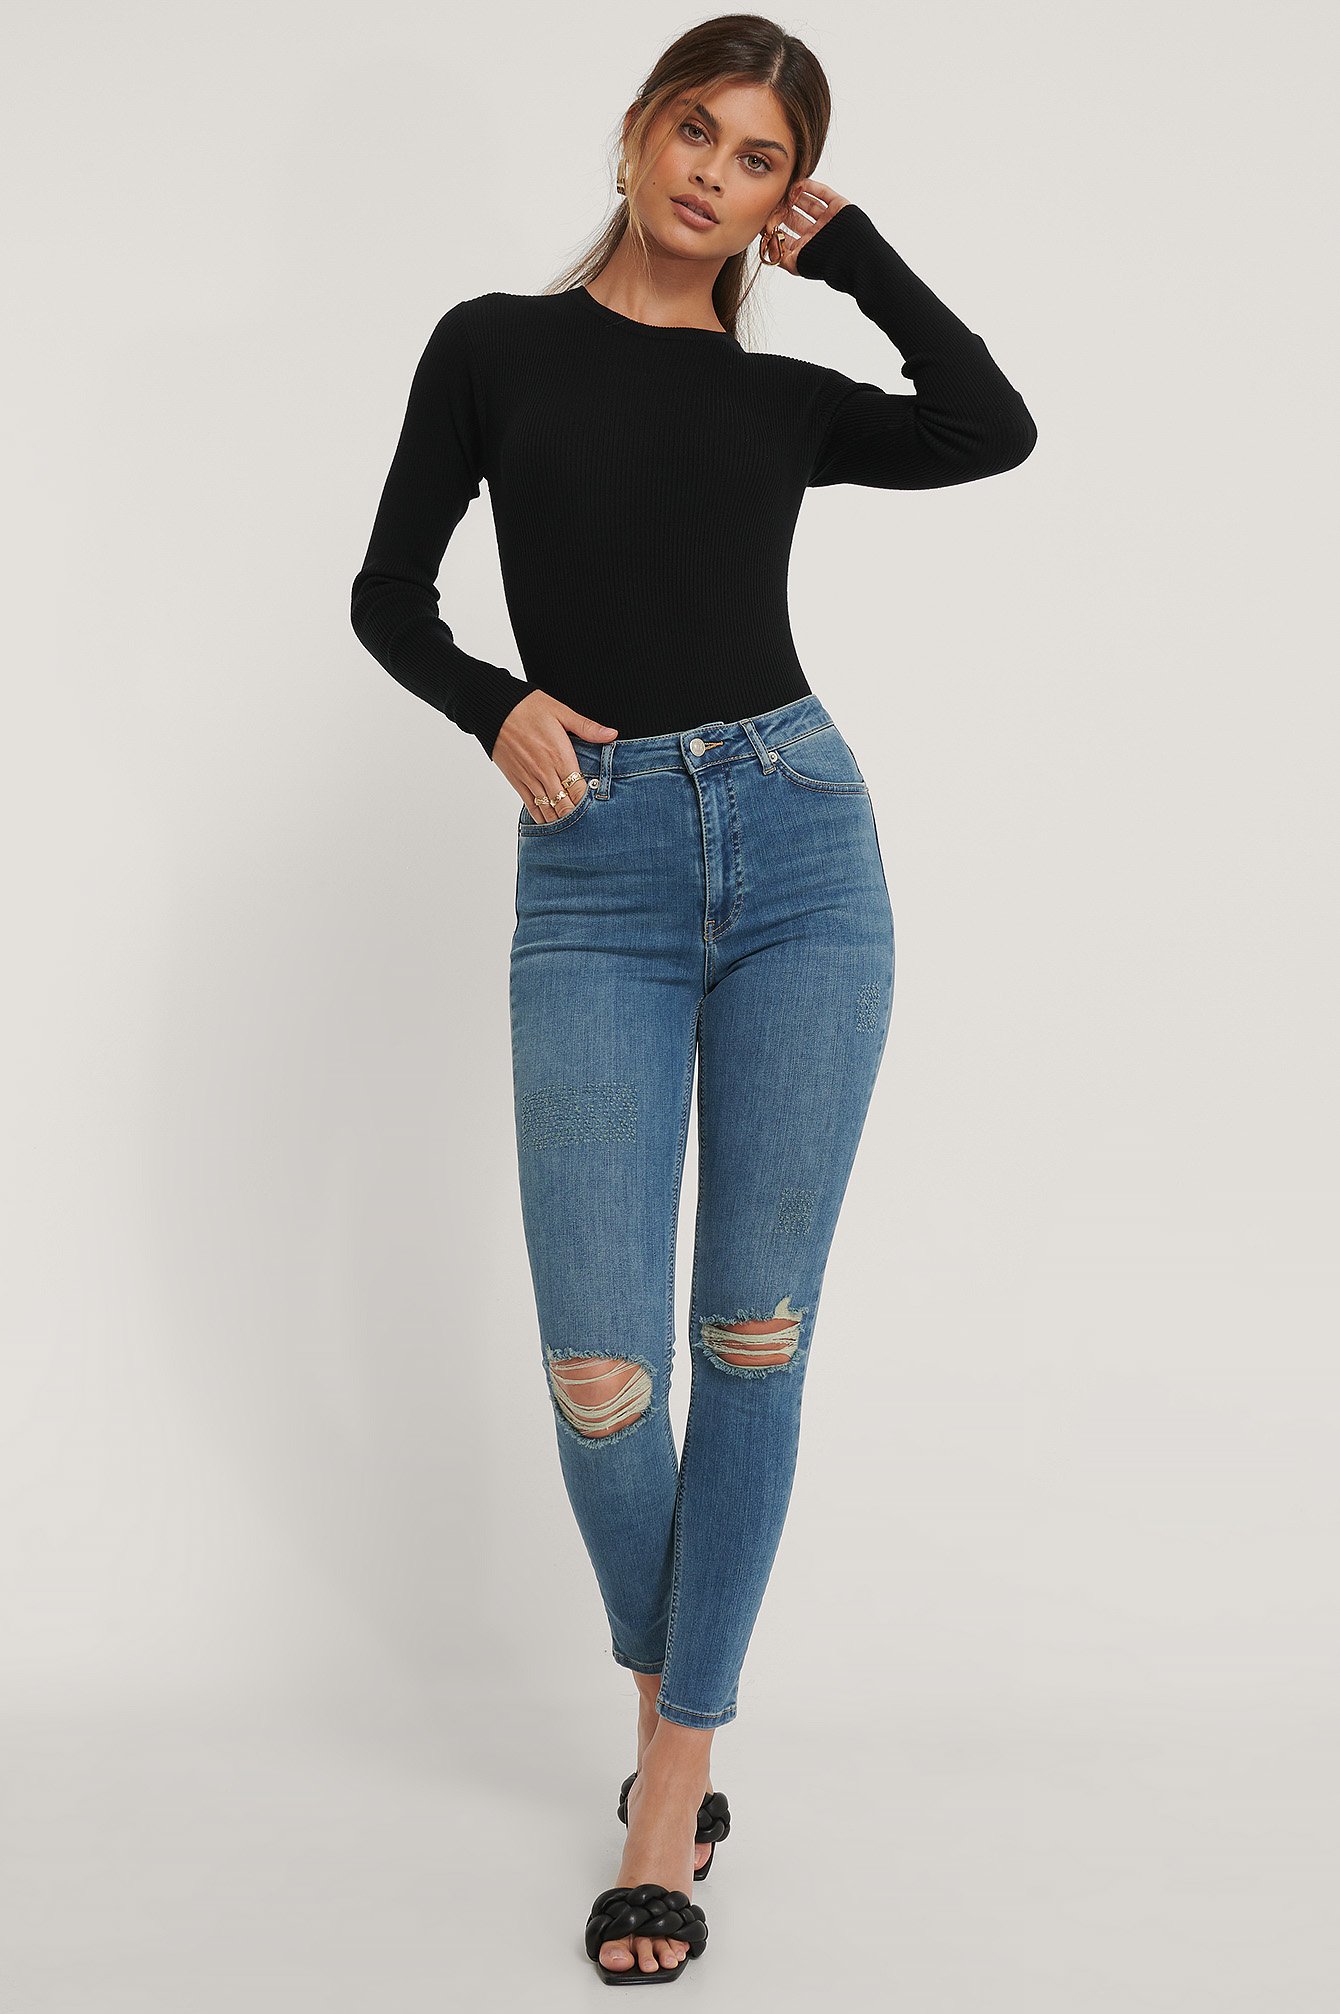 NA-KD Denim Reborn Organische Skinny Jeans mit hoher Taille Used-Look in Blau Damen Bekleidung Jeans Röhrenjeans 